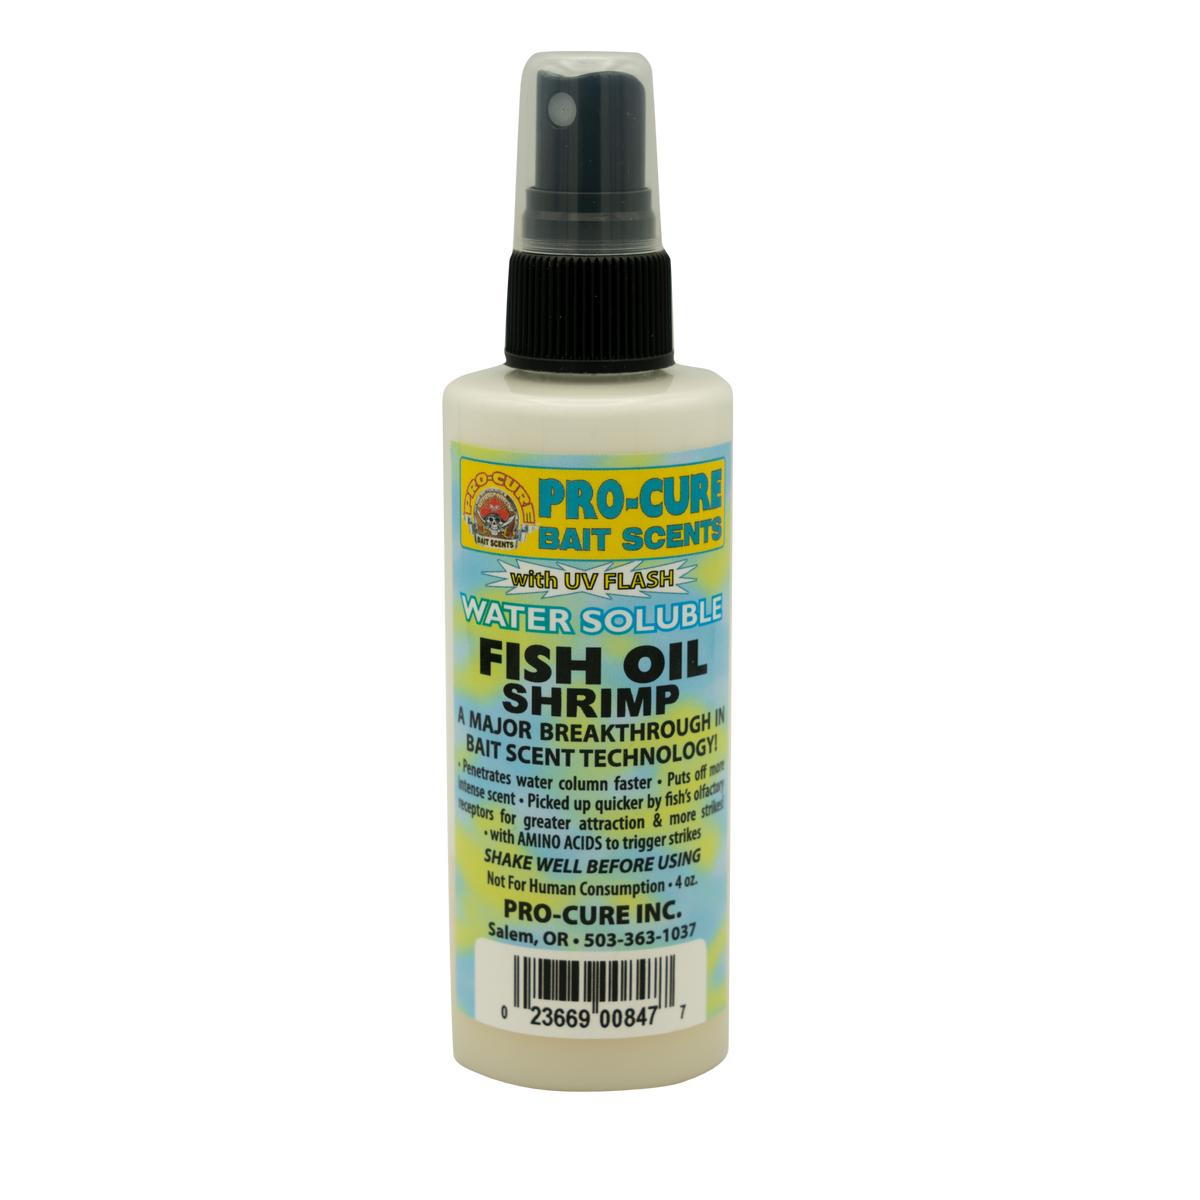 SHRIMP WATER SOLUBLE FISH OIL – Pro-Cure, Inc